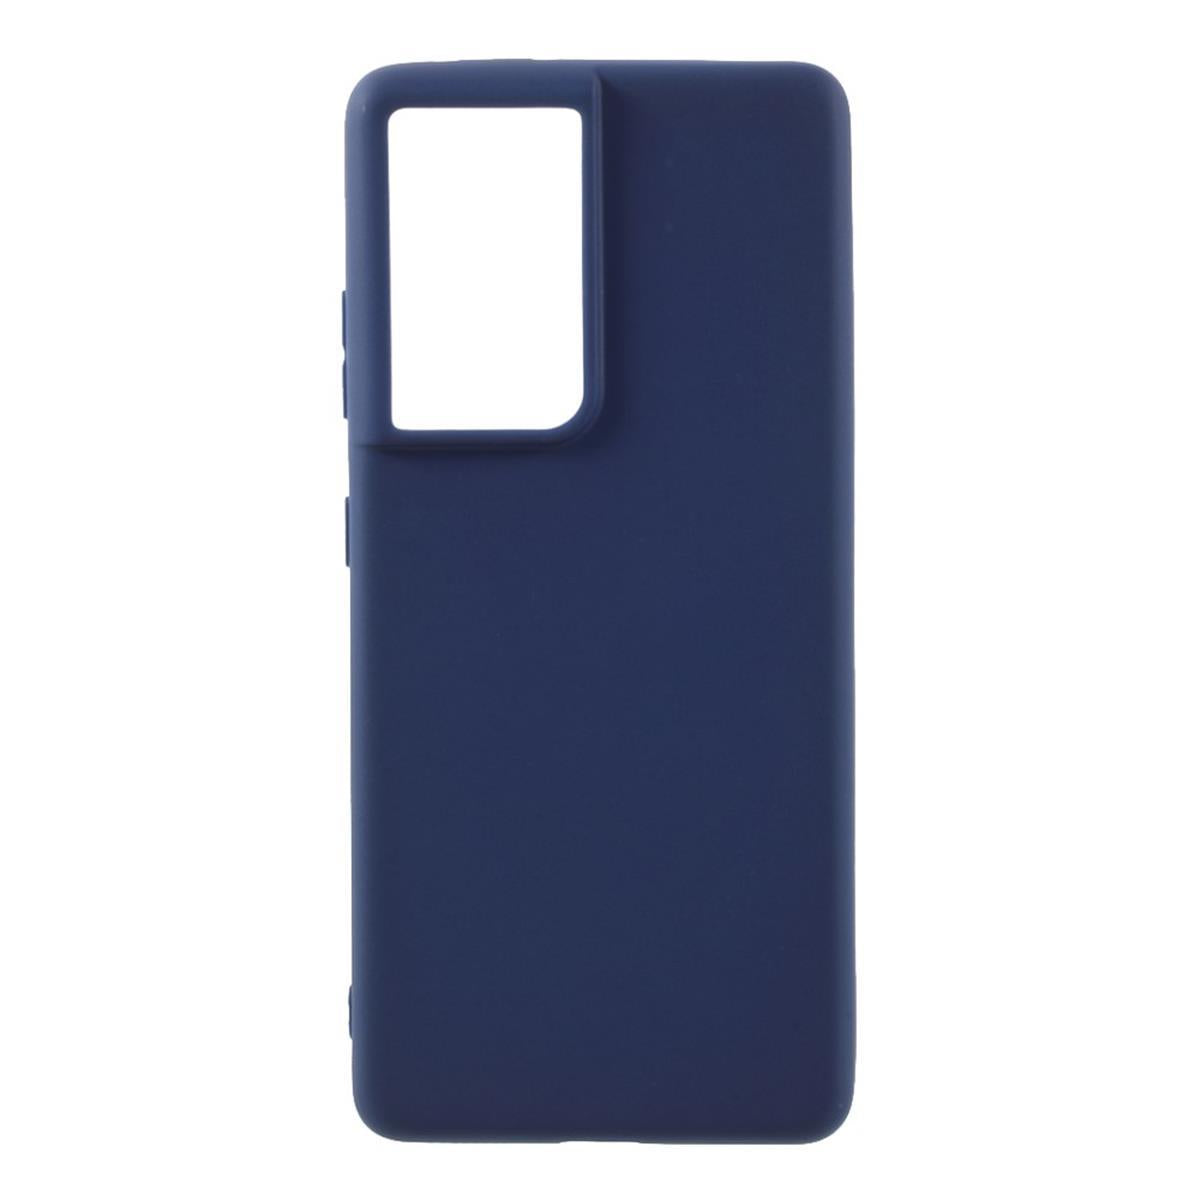 Hülle für Samsung Galaxy S21 Ultra 5G Handyhülle Silikon Case Cover Schutzhülle Matt Blau